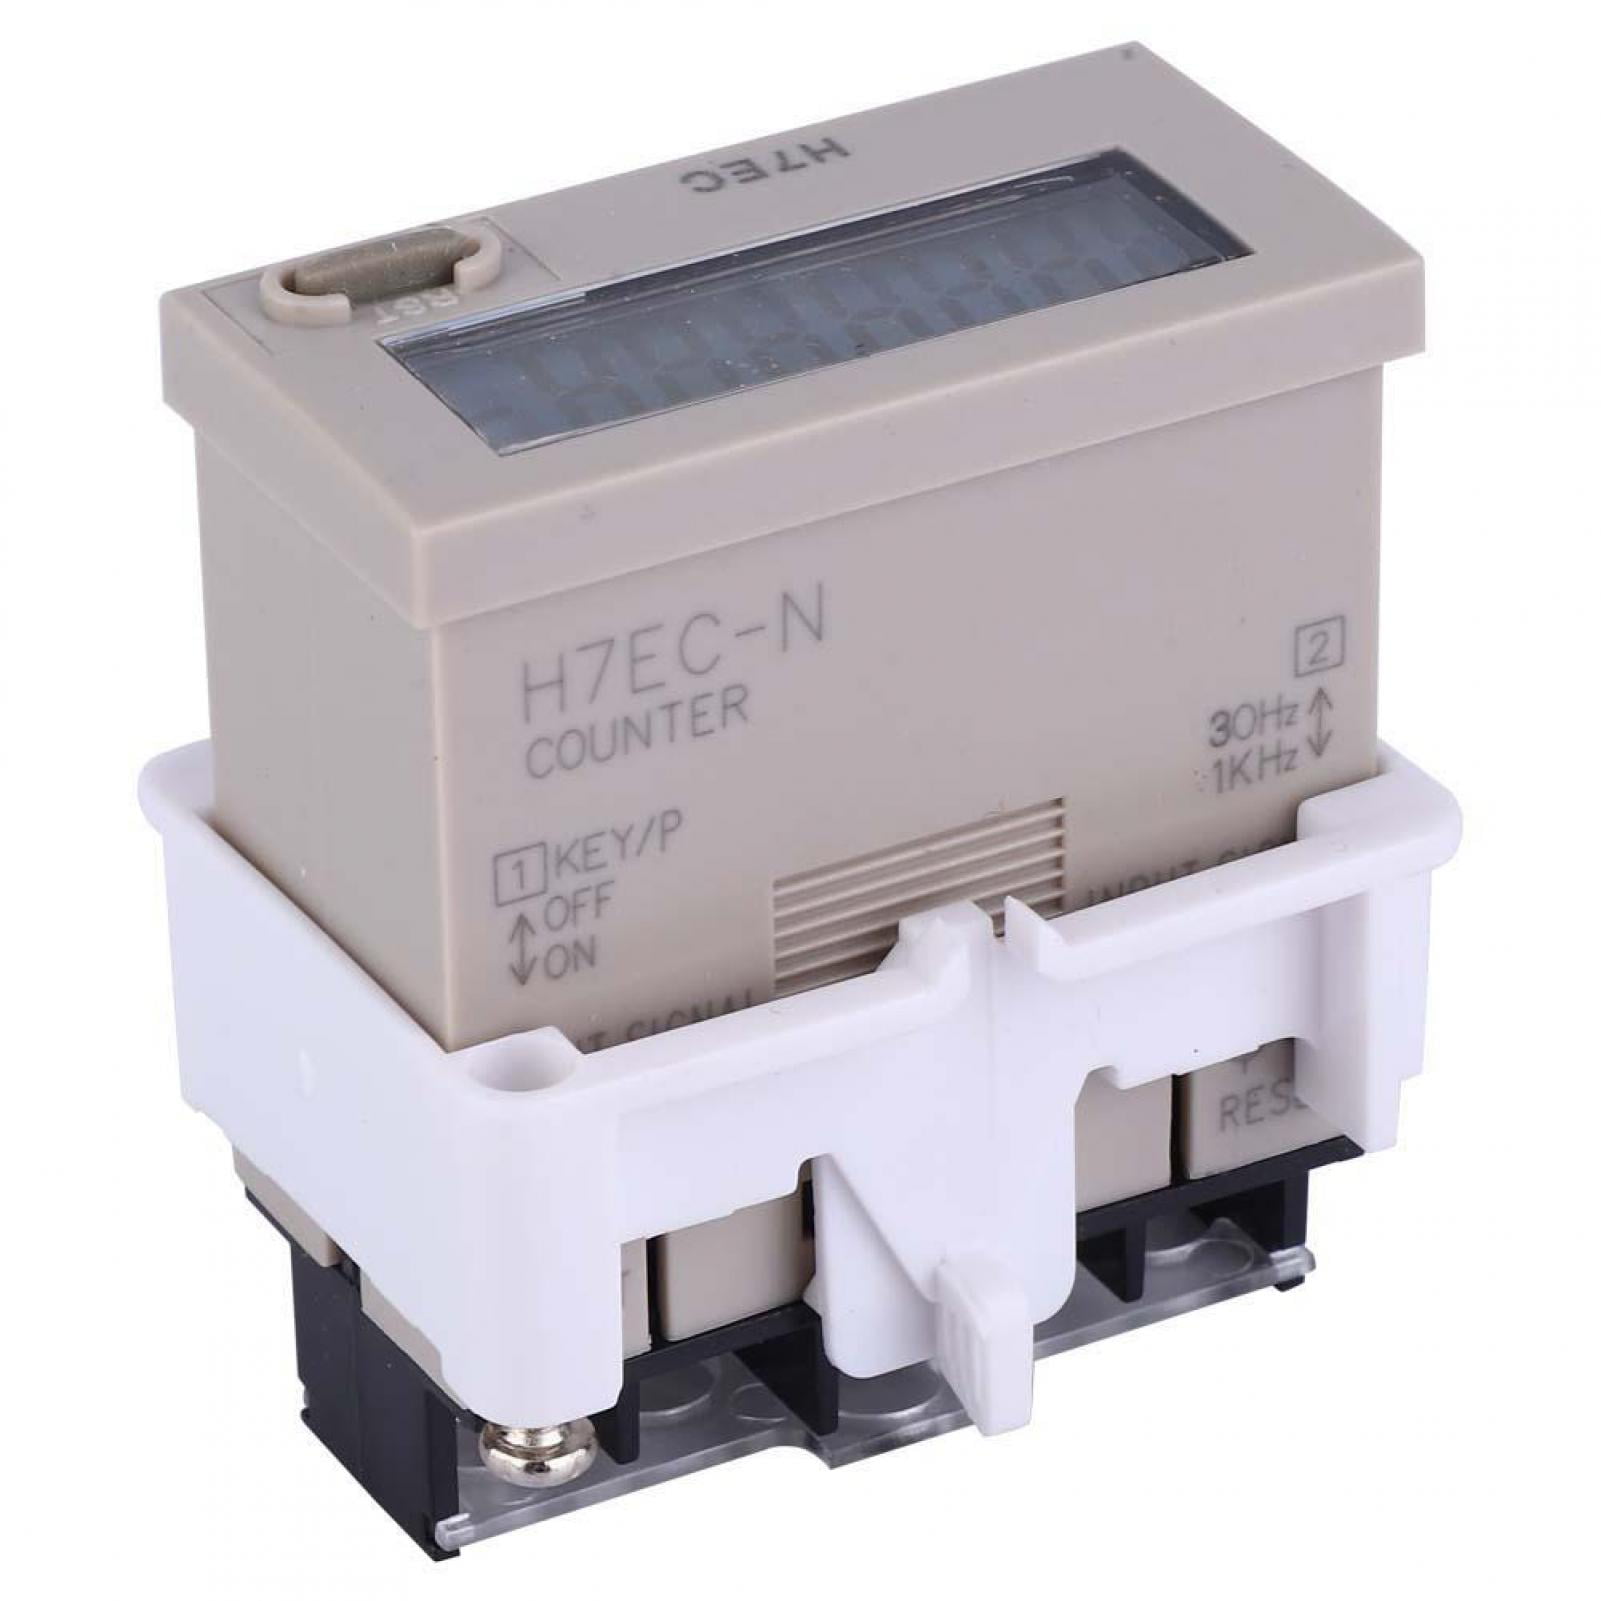 H7EC-N Without Input Voltage LED Digital Counter Meter Digital Electrical Counter 8 Digit LCD Display 0-99999999 Counting Range Digital Totalizer with Holder 